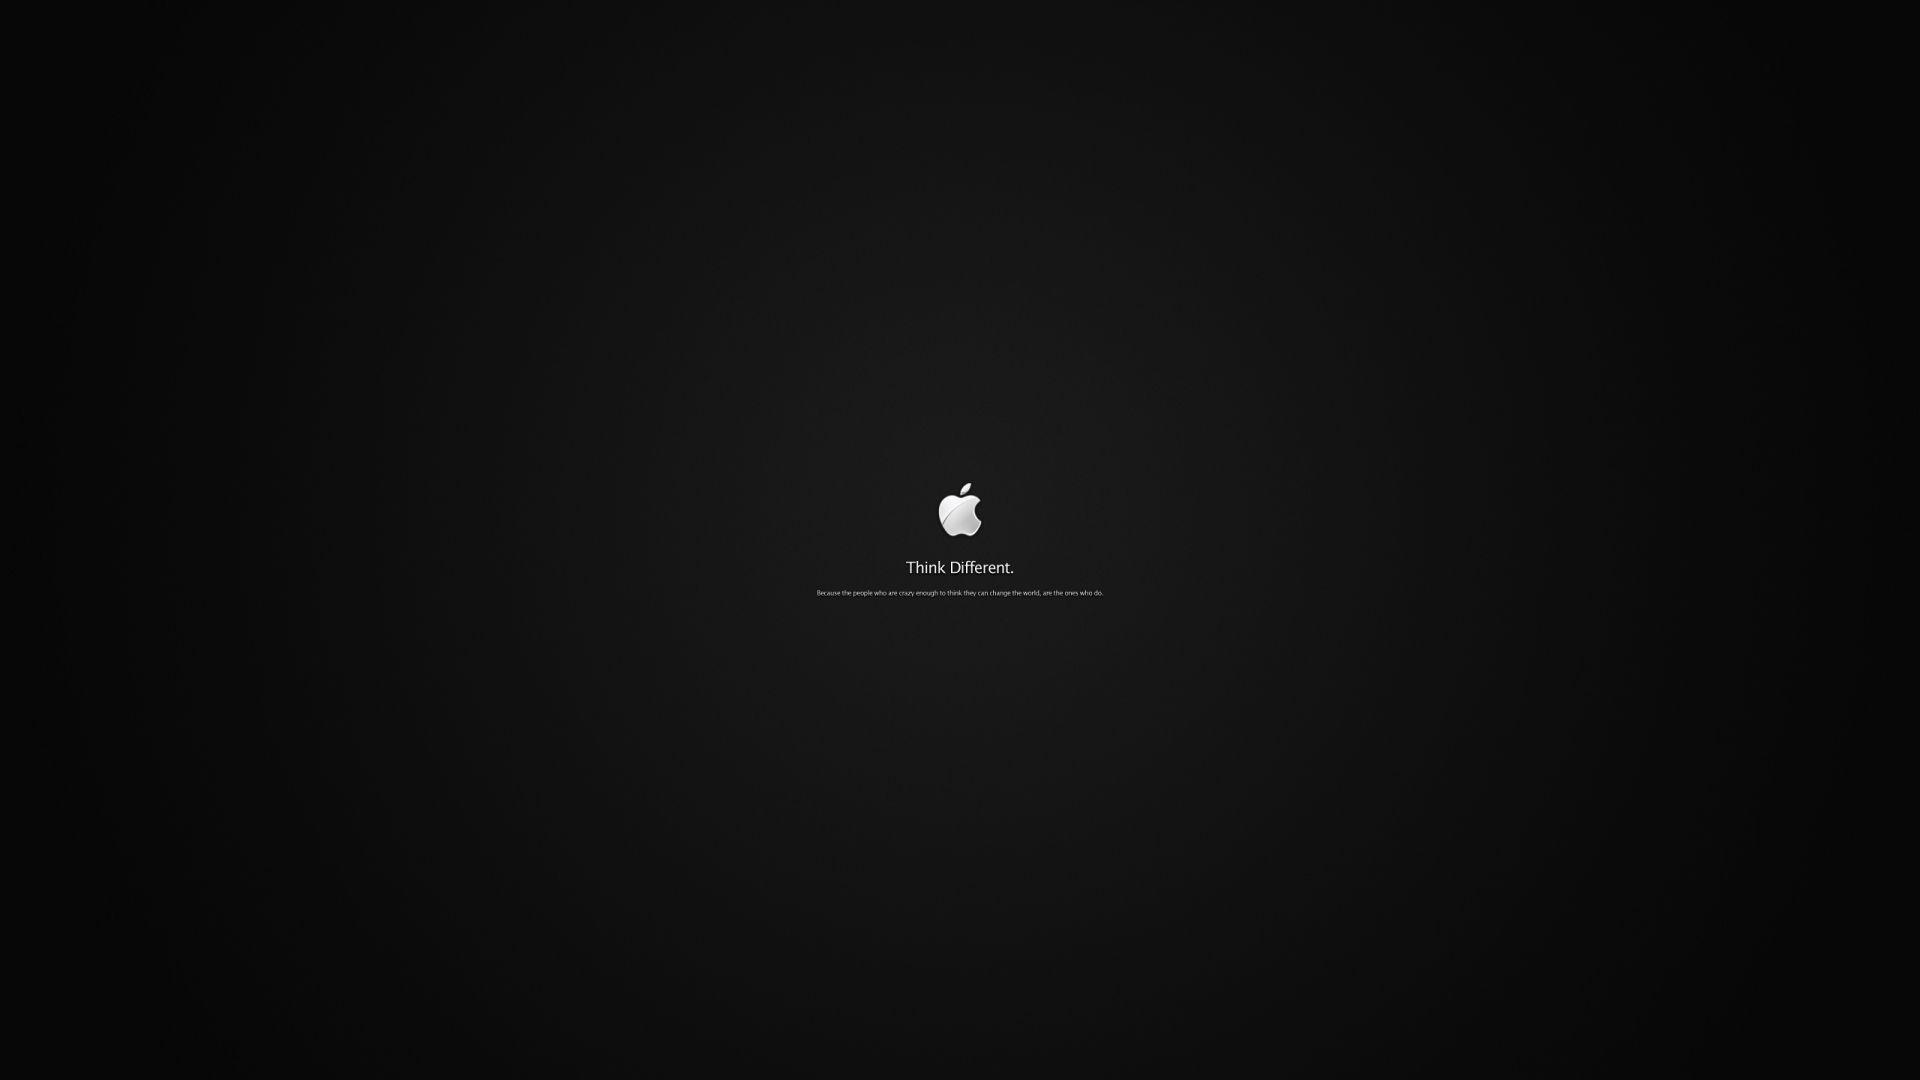 Tiny Apple Logo - Tiny Apple Logo Wallpaper - HD Wallpapers